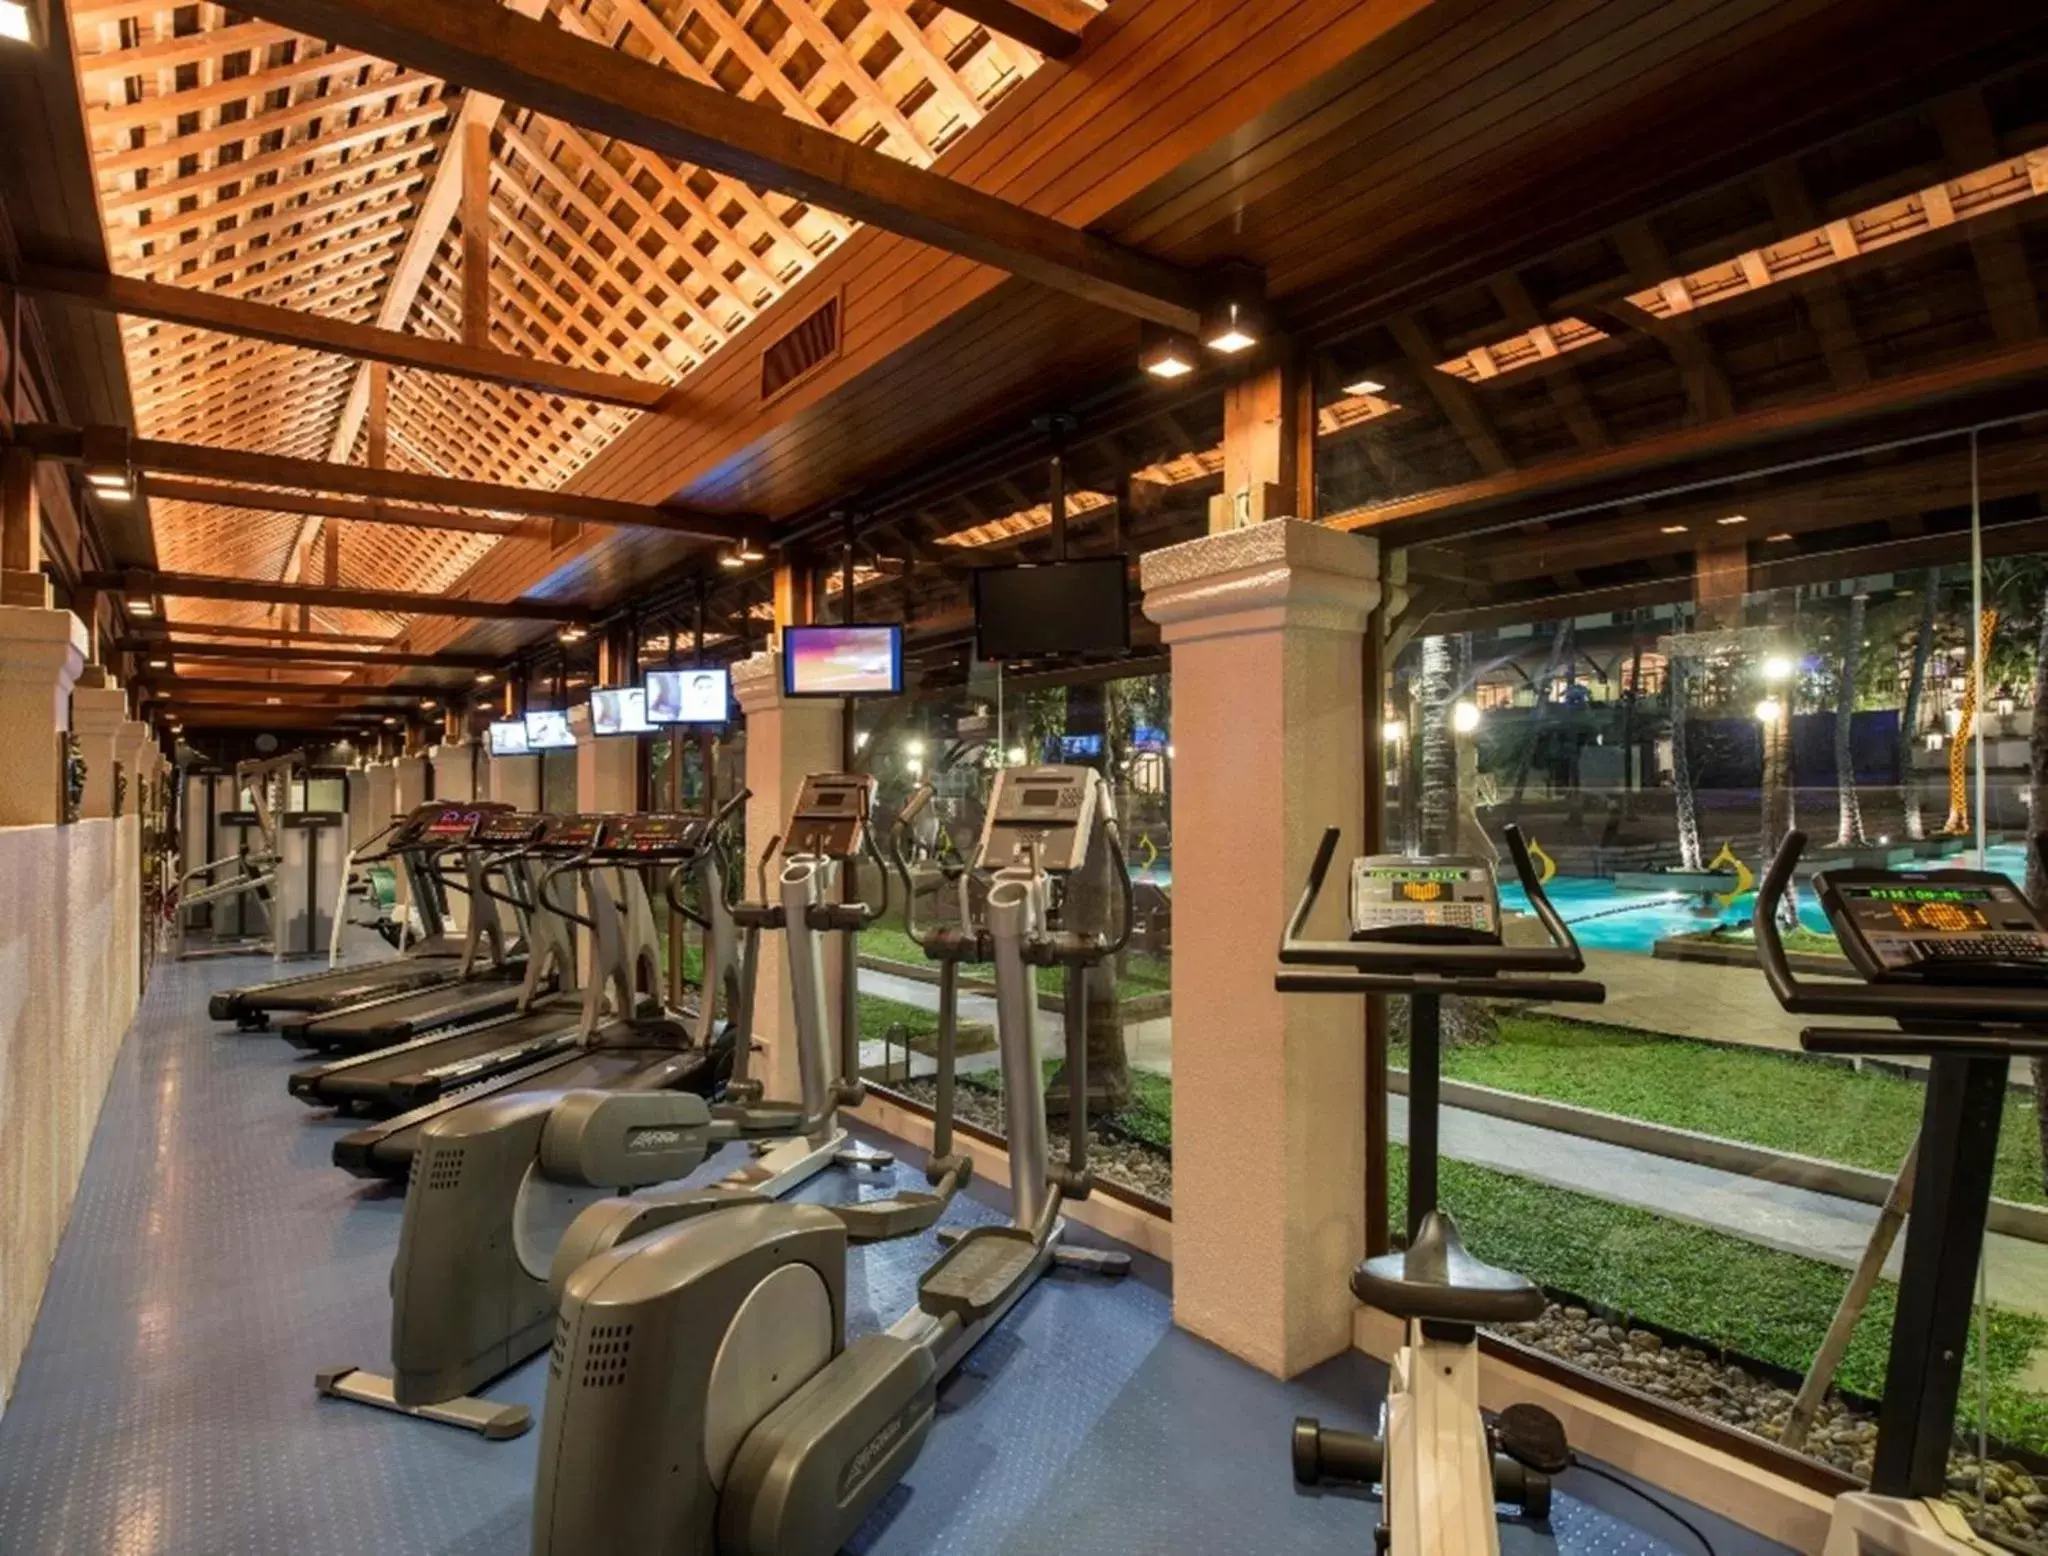 Fitness centre/facilities, Fitness Center/Facilities in Chatrium Hotel Royal Lake Yangon